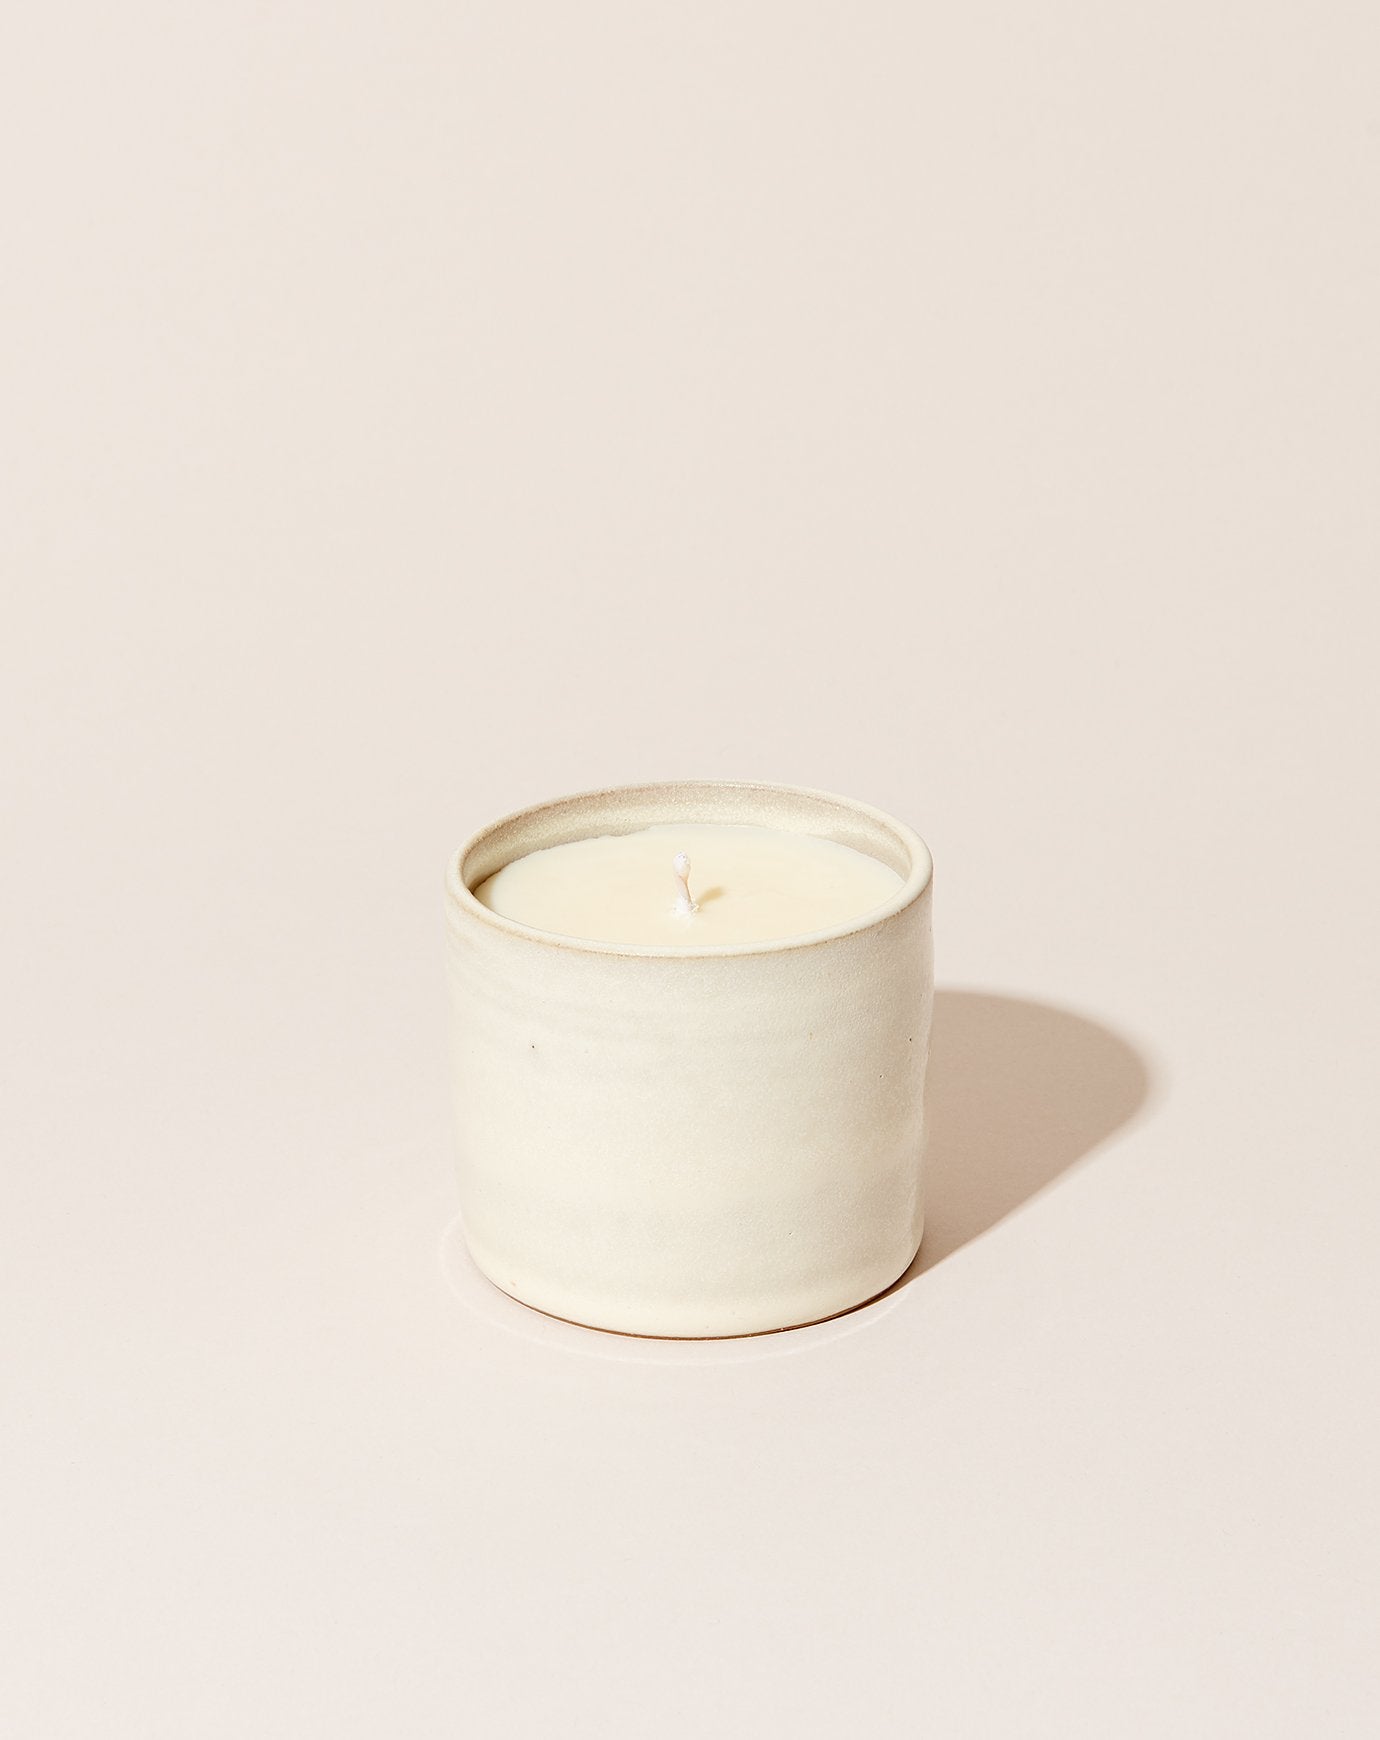 Essential Oil Off White Ceramic Candle: Basil & Bergamot